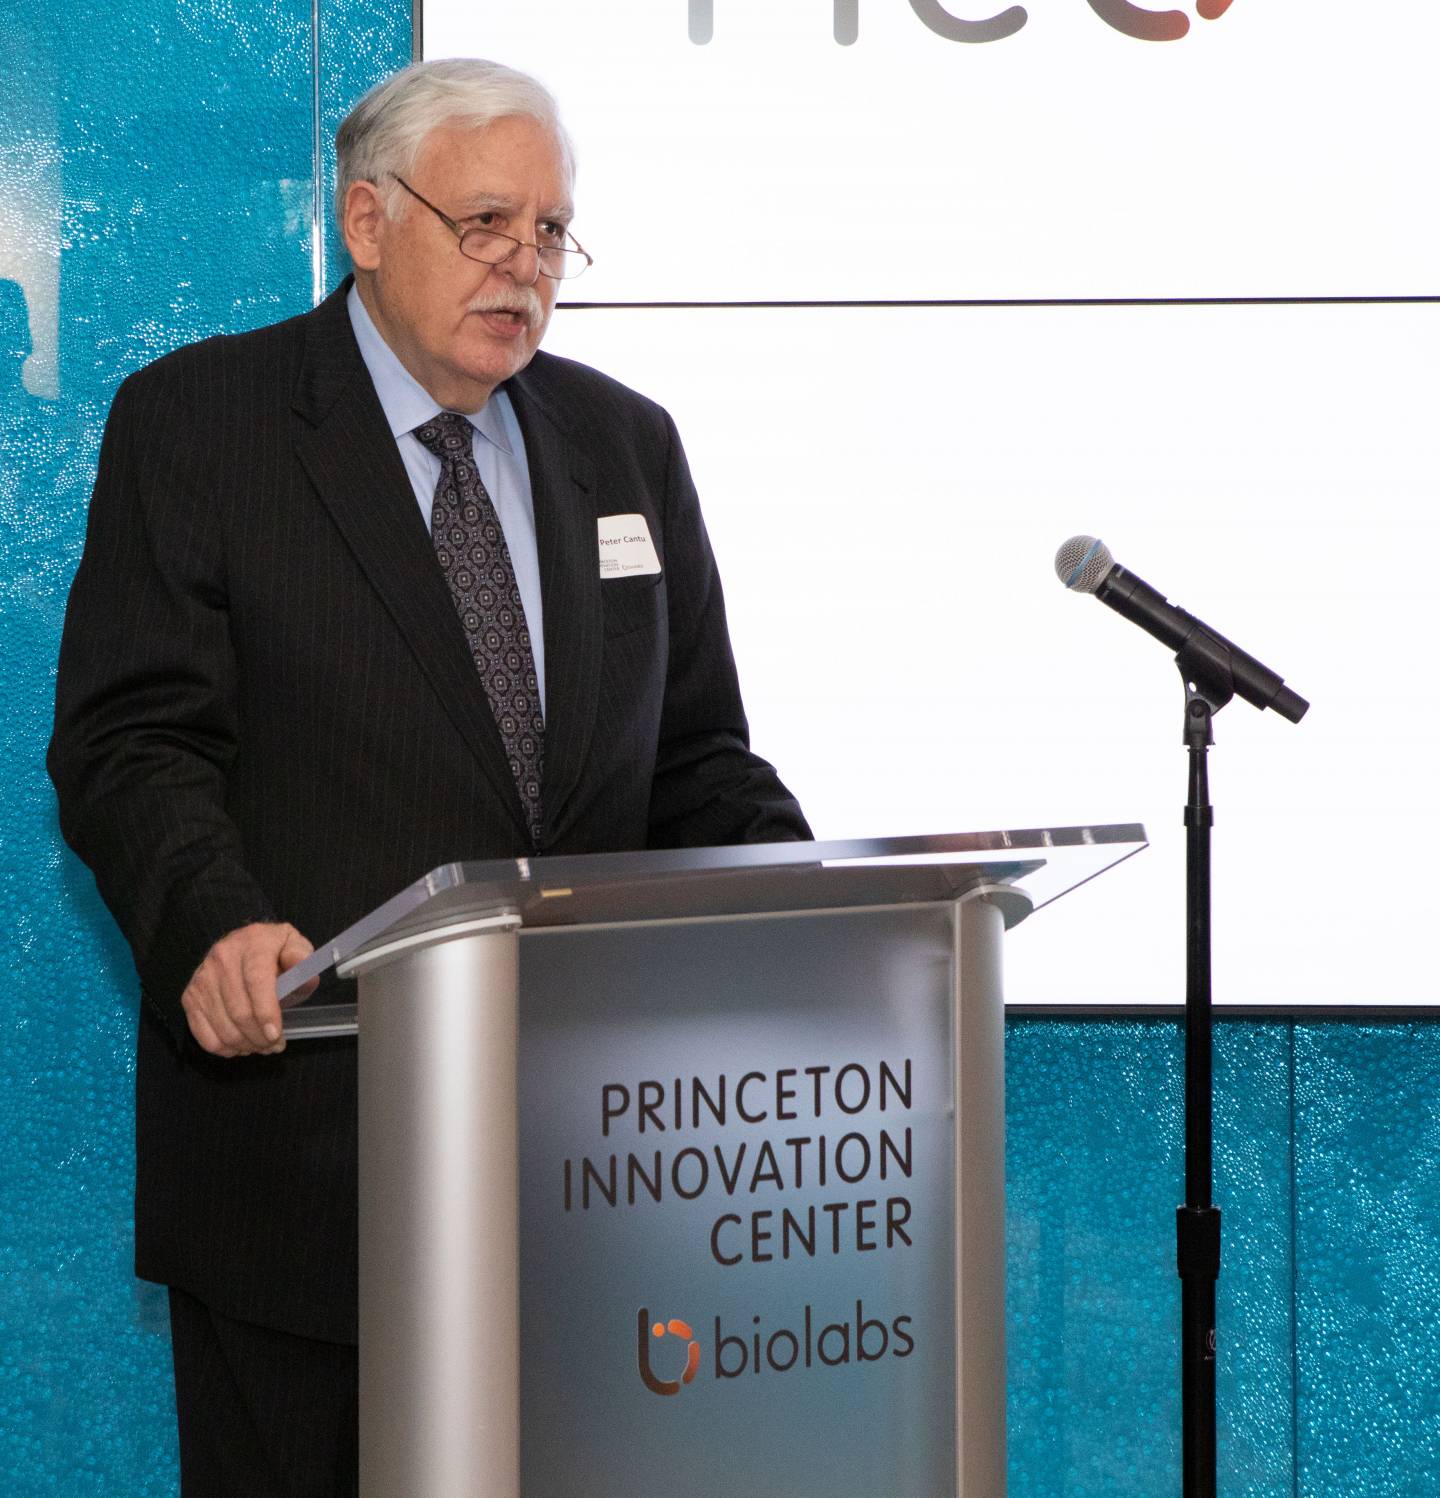 Plainsboro mayor Cantu speaking at the Princeton Innovation Center BioLabs opening ceremony